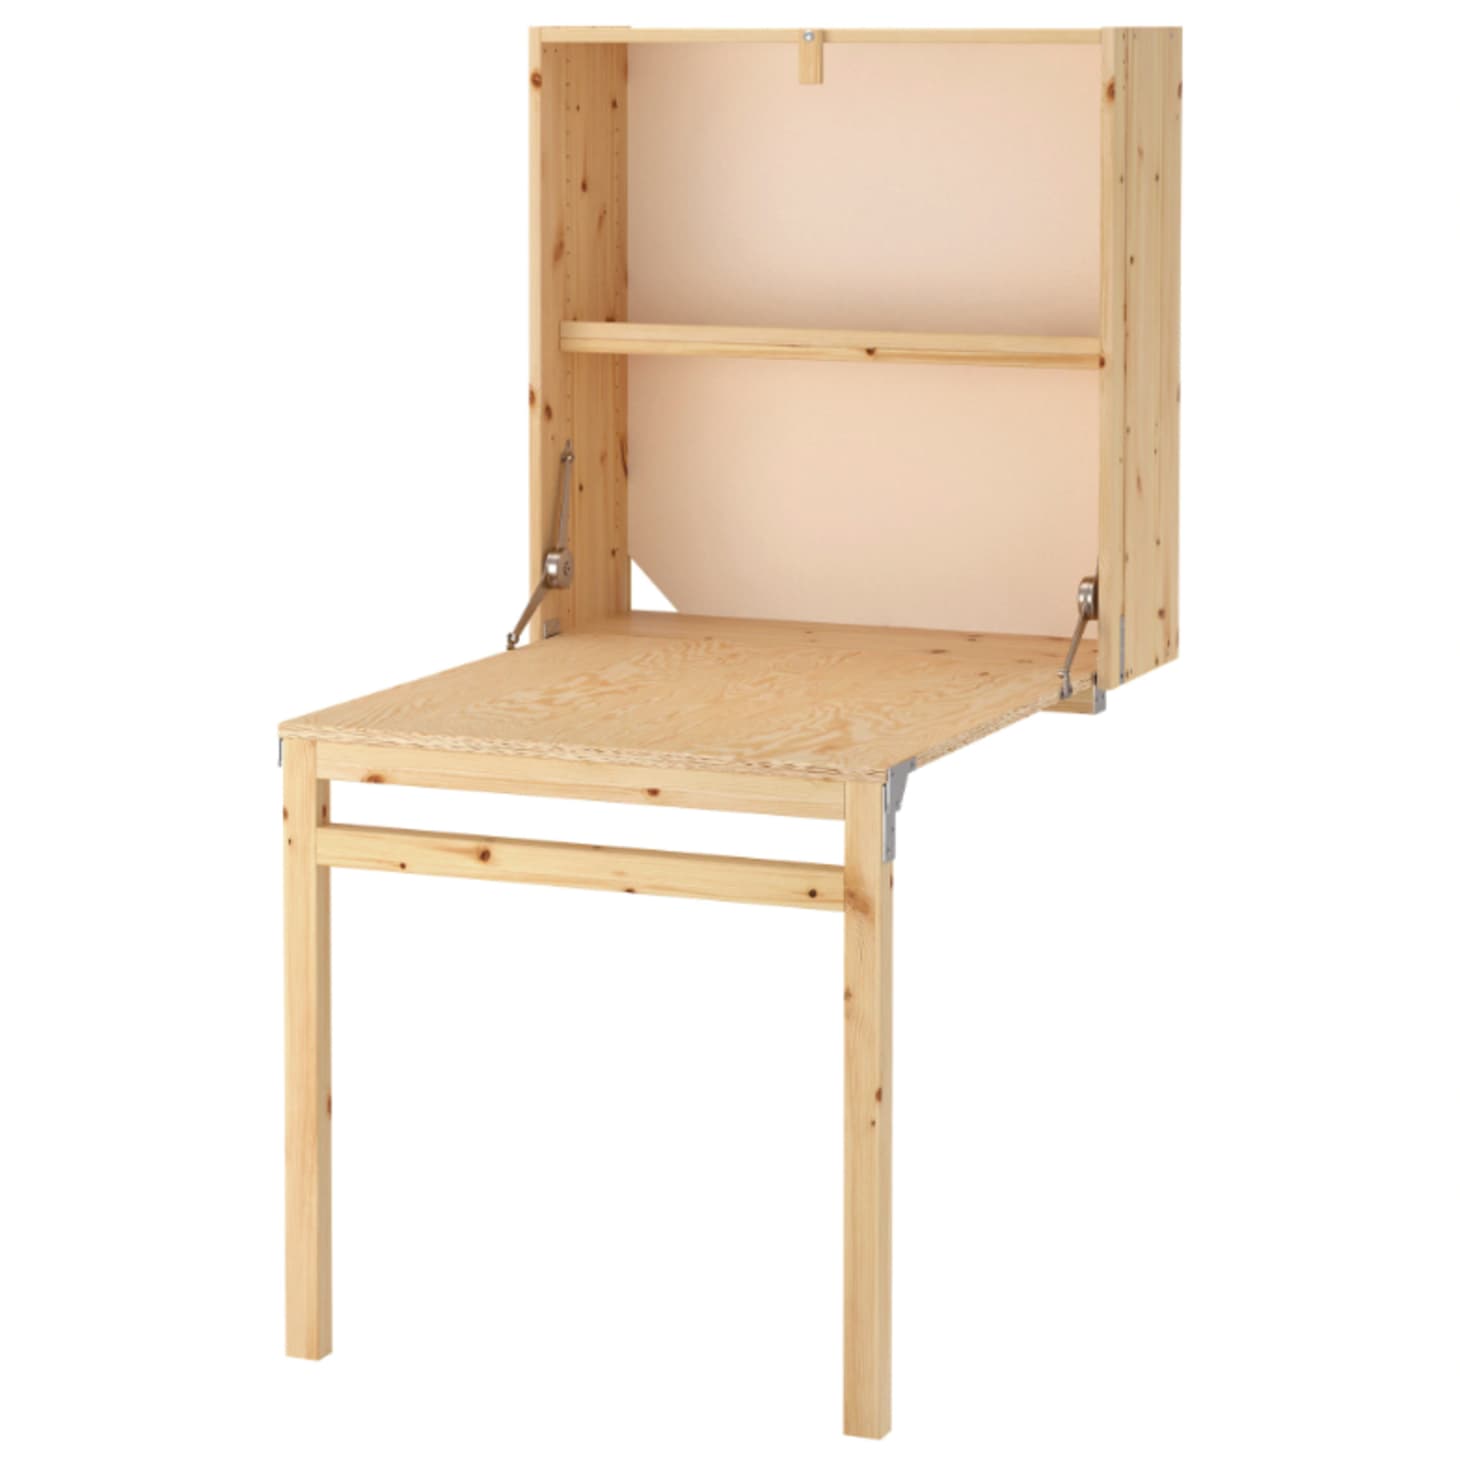 Ikea Furniture With Hidden Storage Cheap Ikea Storage Products